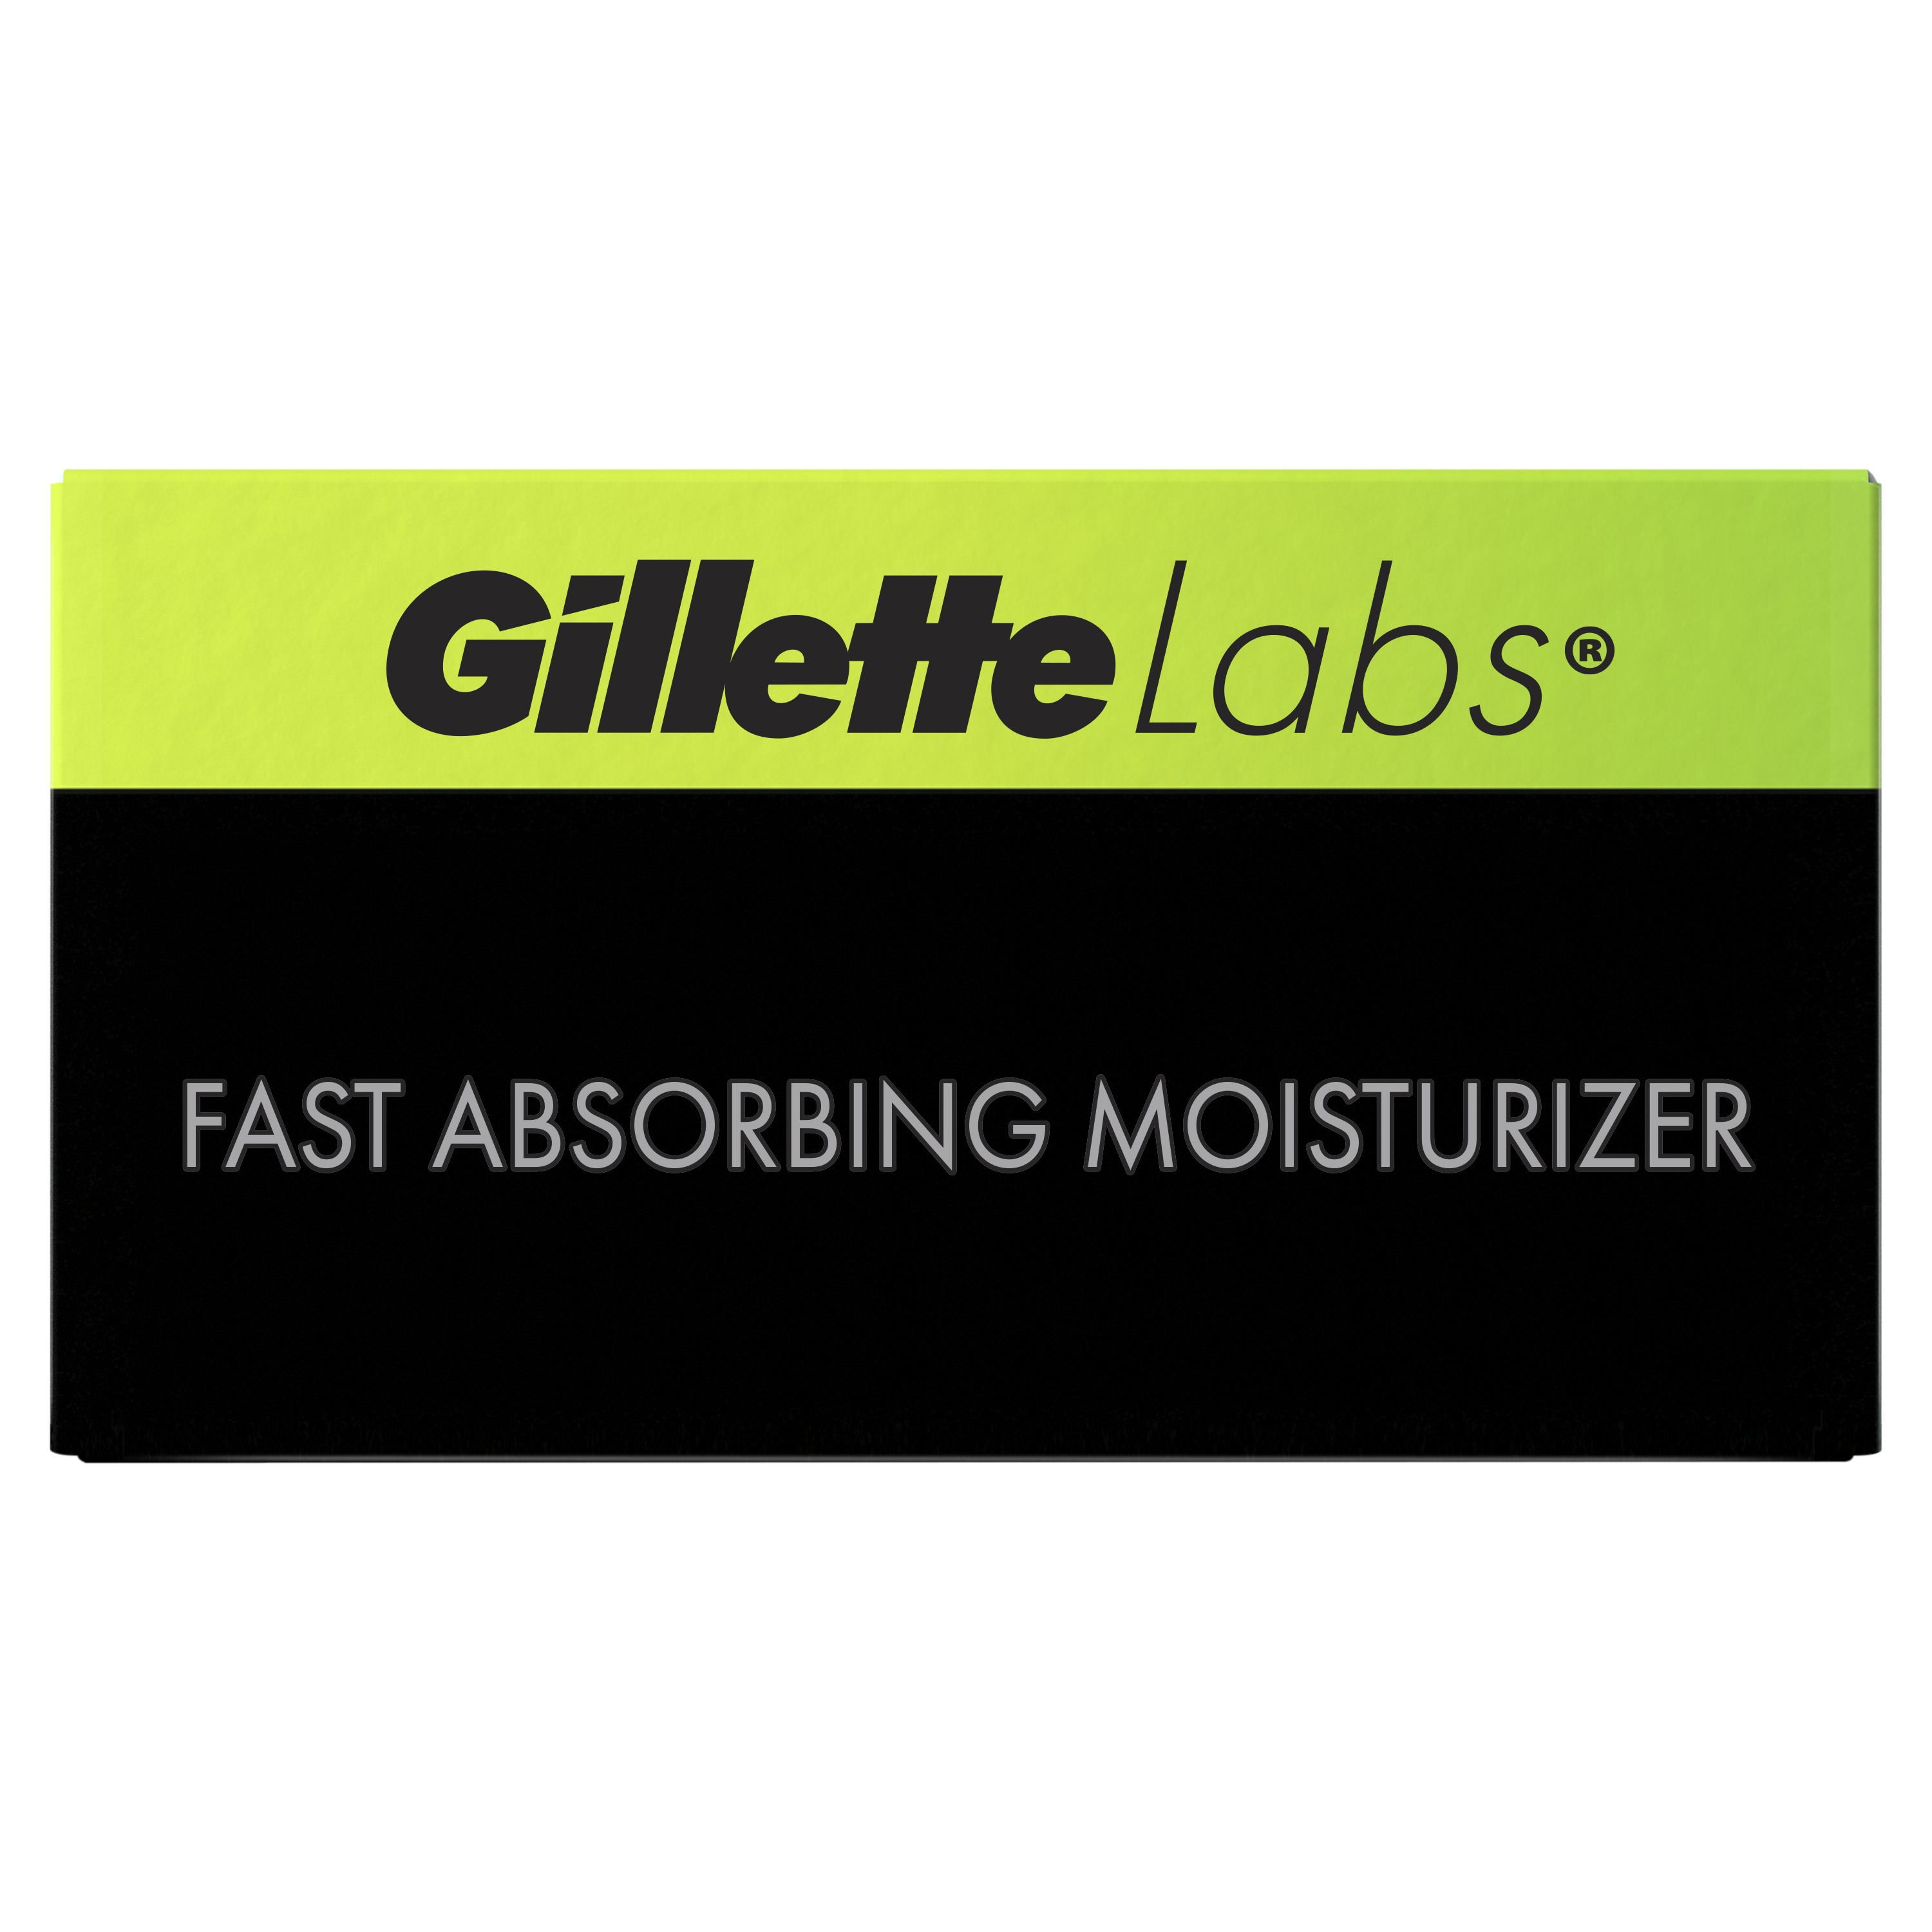 GilletteLabs Fast Absorbing Moisturizer by Gillette, Lightweight 